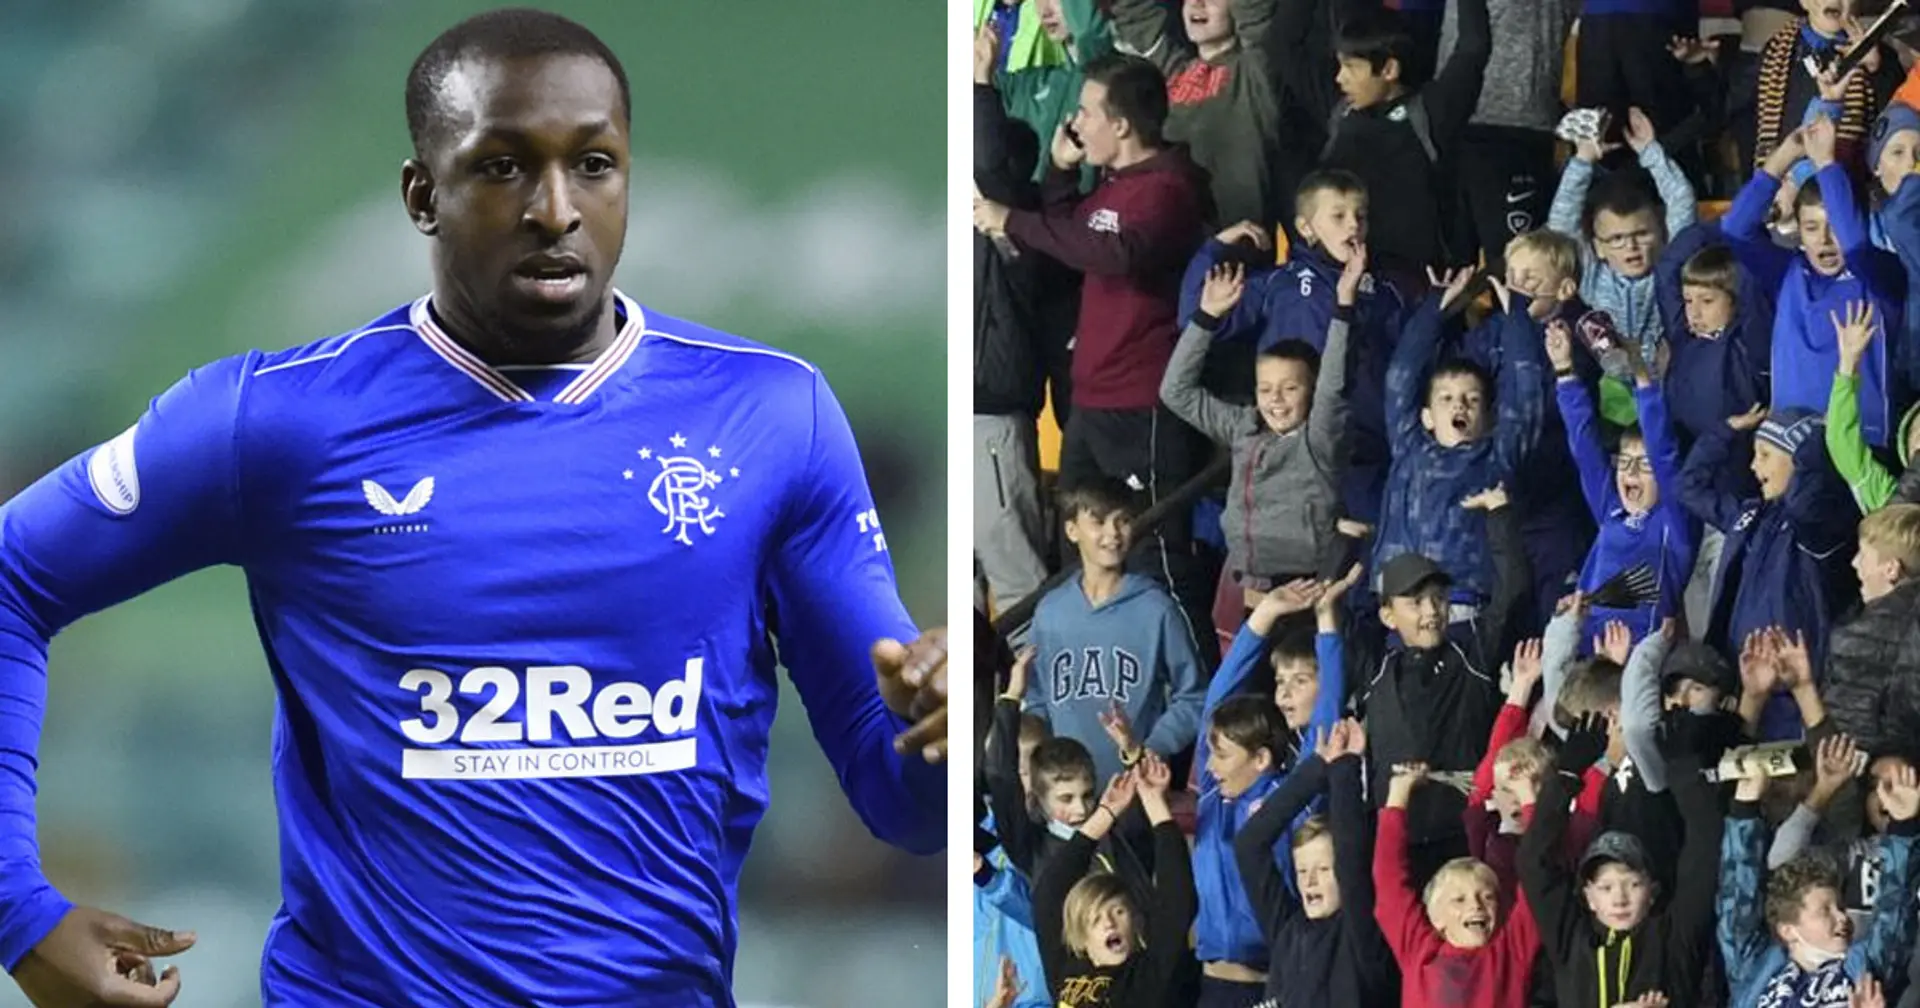 Rangers midfielder Glen Kamara 'booed with every touch' by kids in Europa League clash